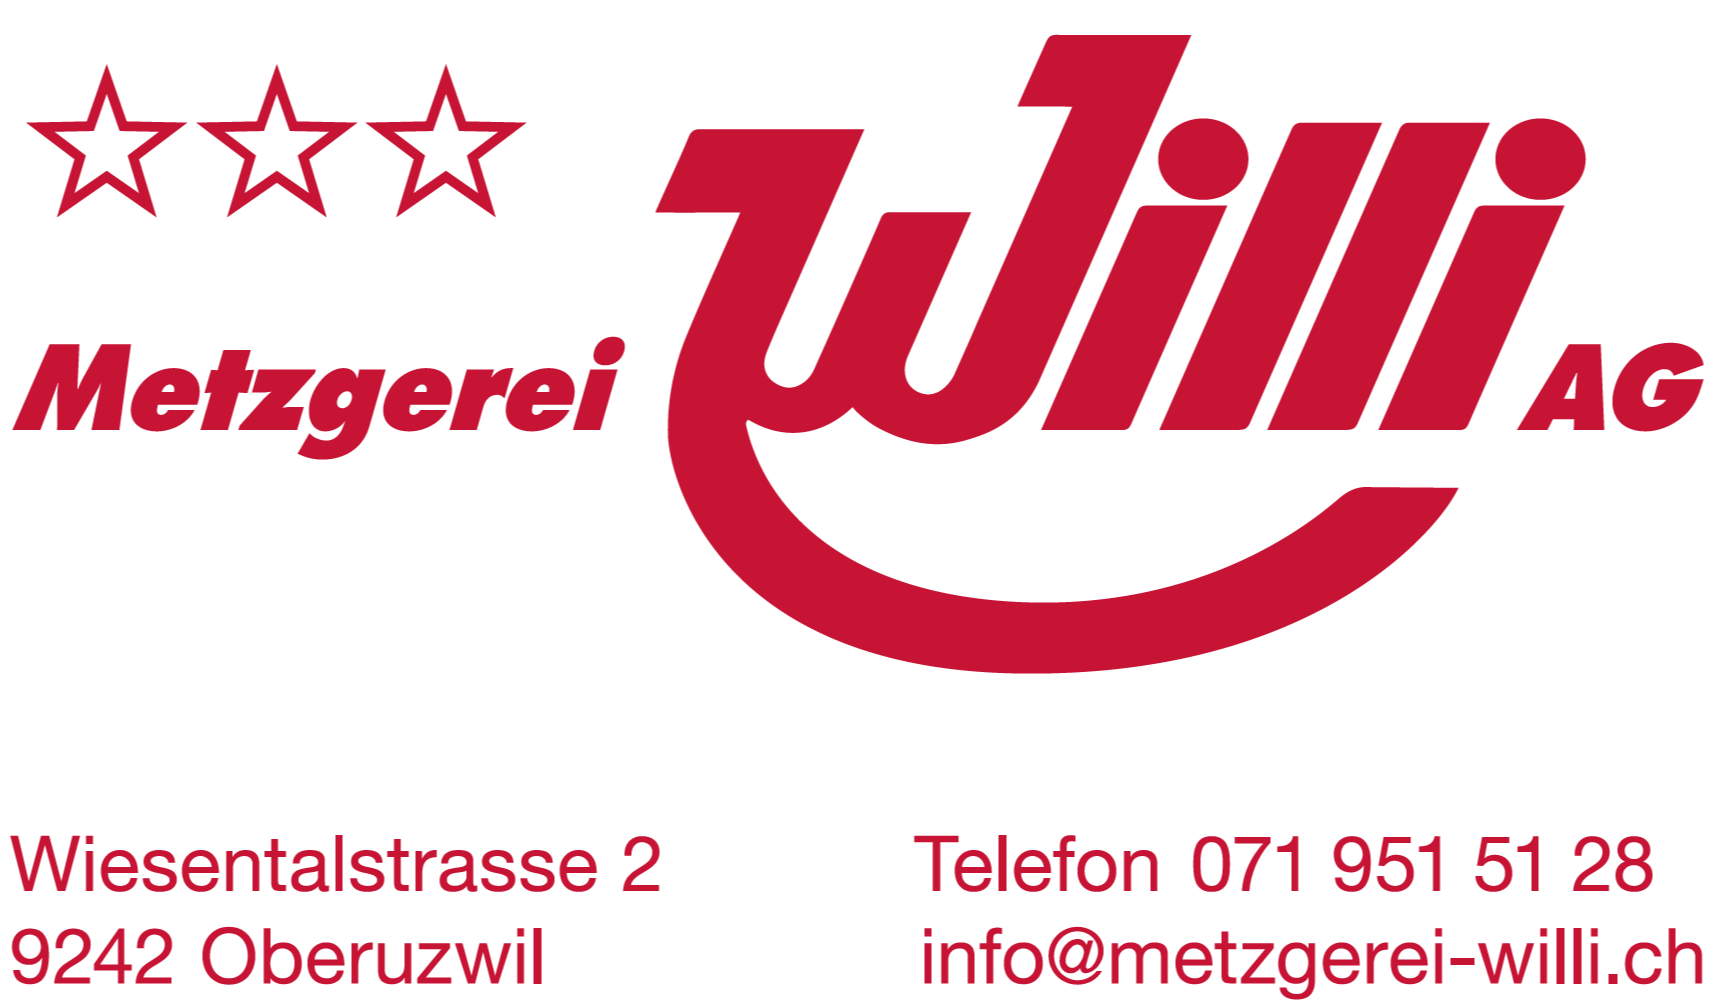 Metzgerei Willi AG